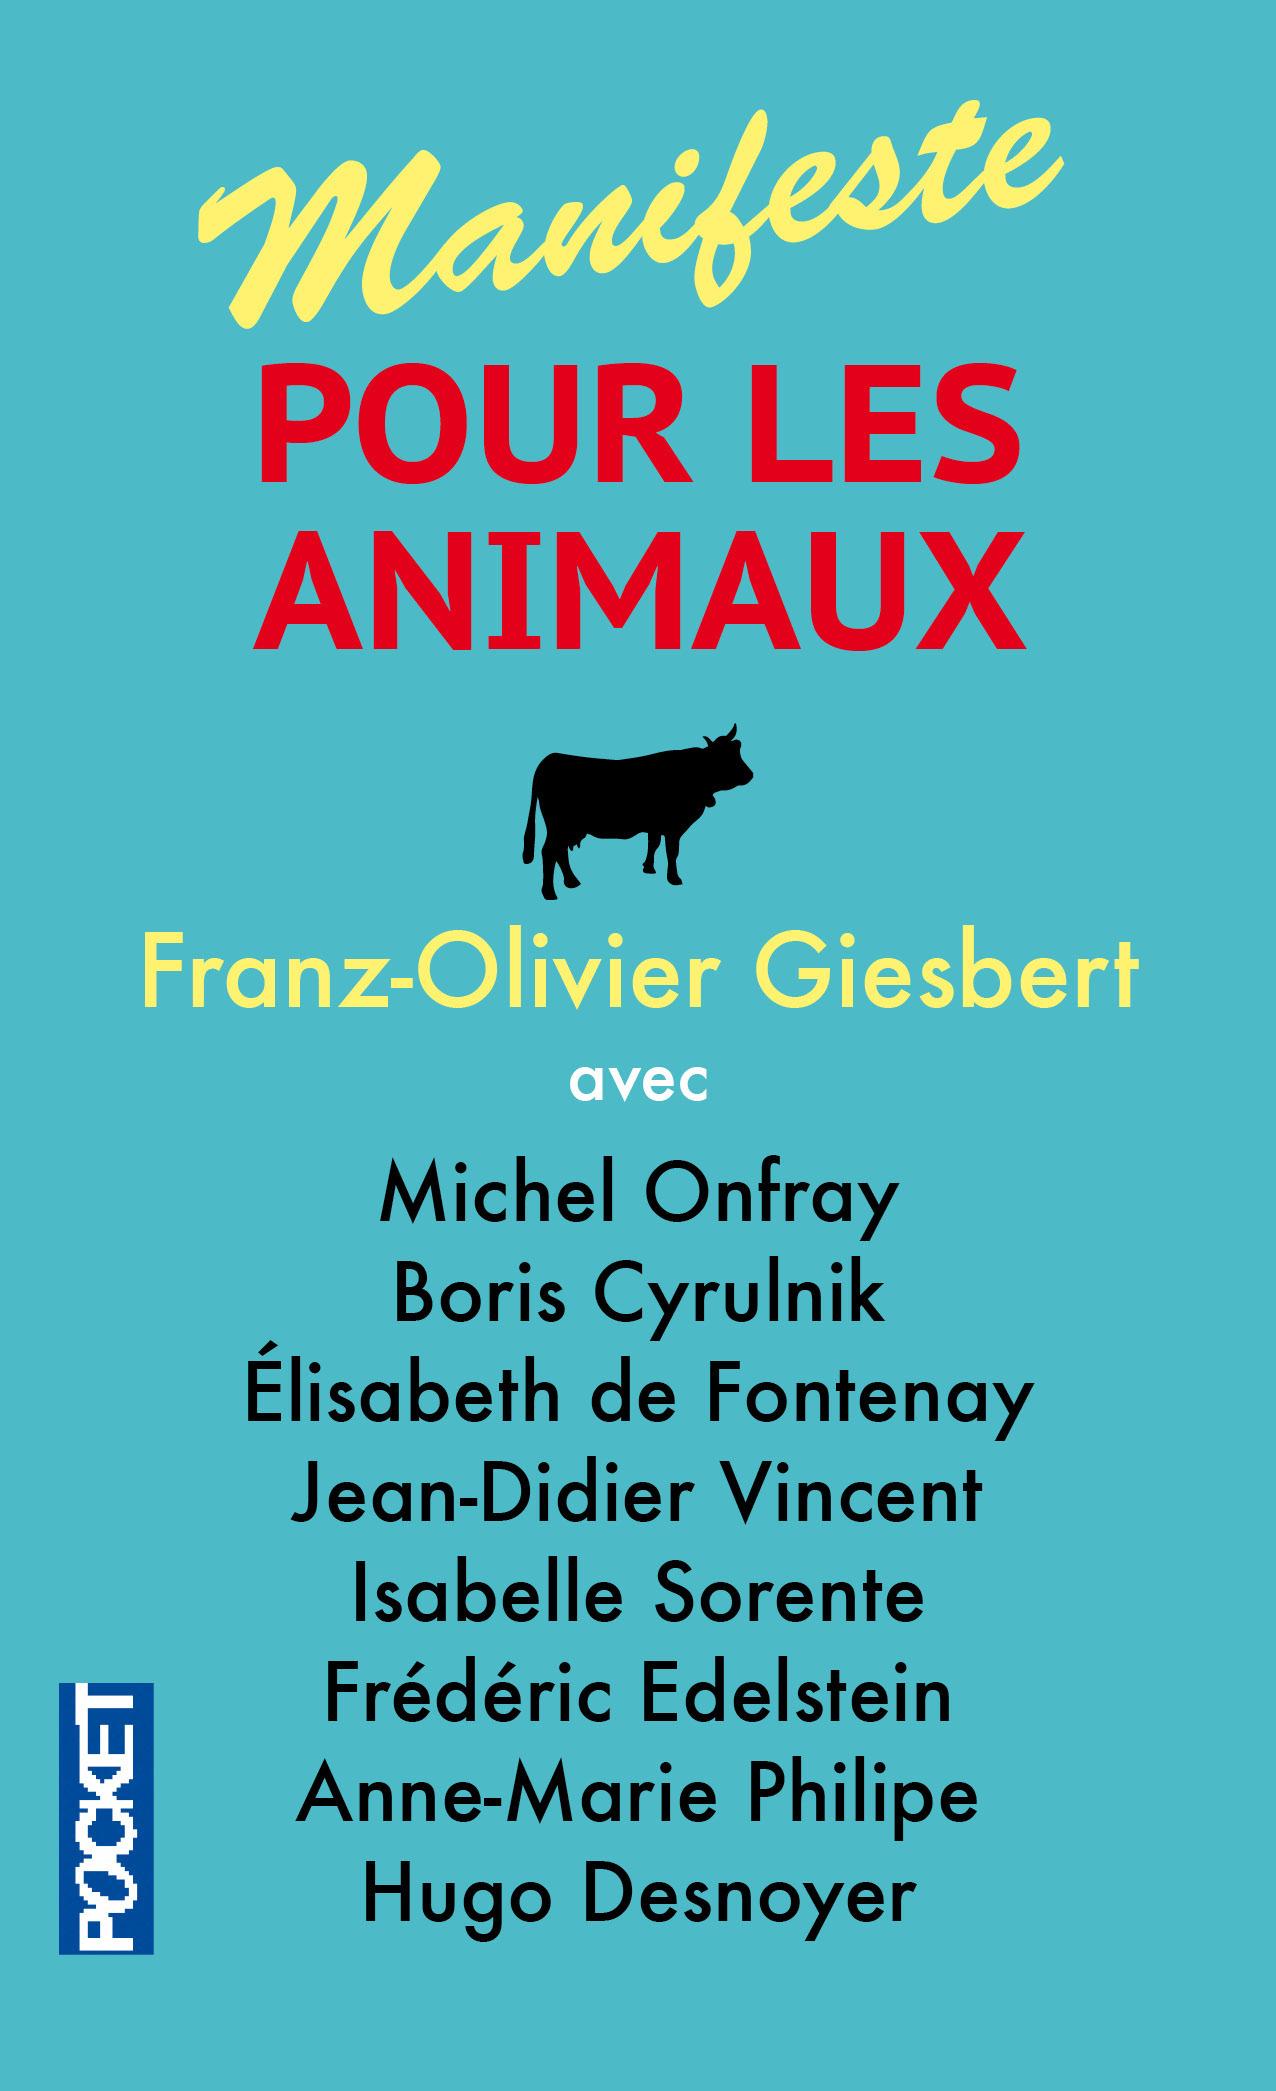 Manifeste pour les animaux  - Franz-Olivier Giesbert  